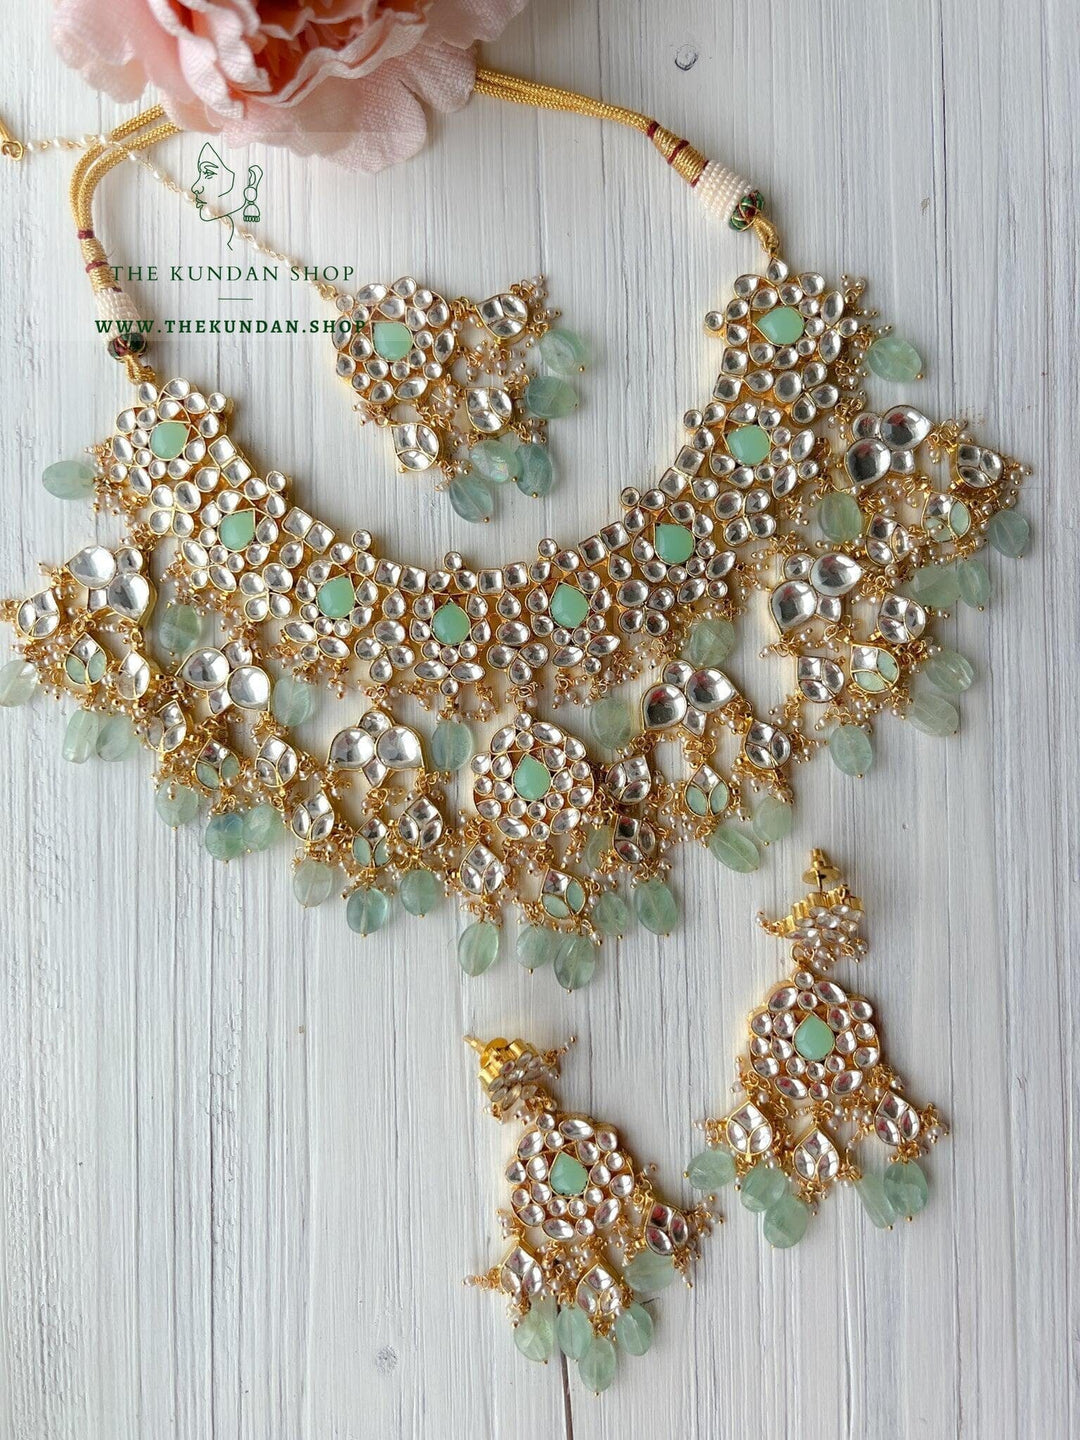 Unconditional Sage & Mint in Kundan Necklace Sets THE KUNDAN SHOP 